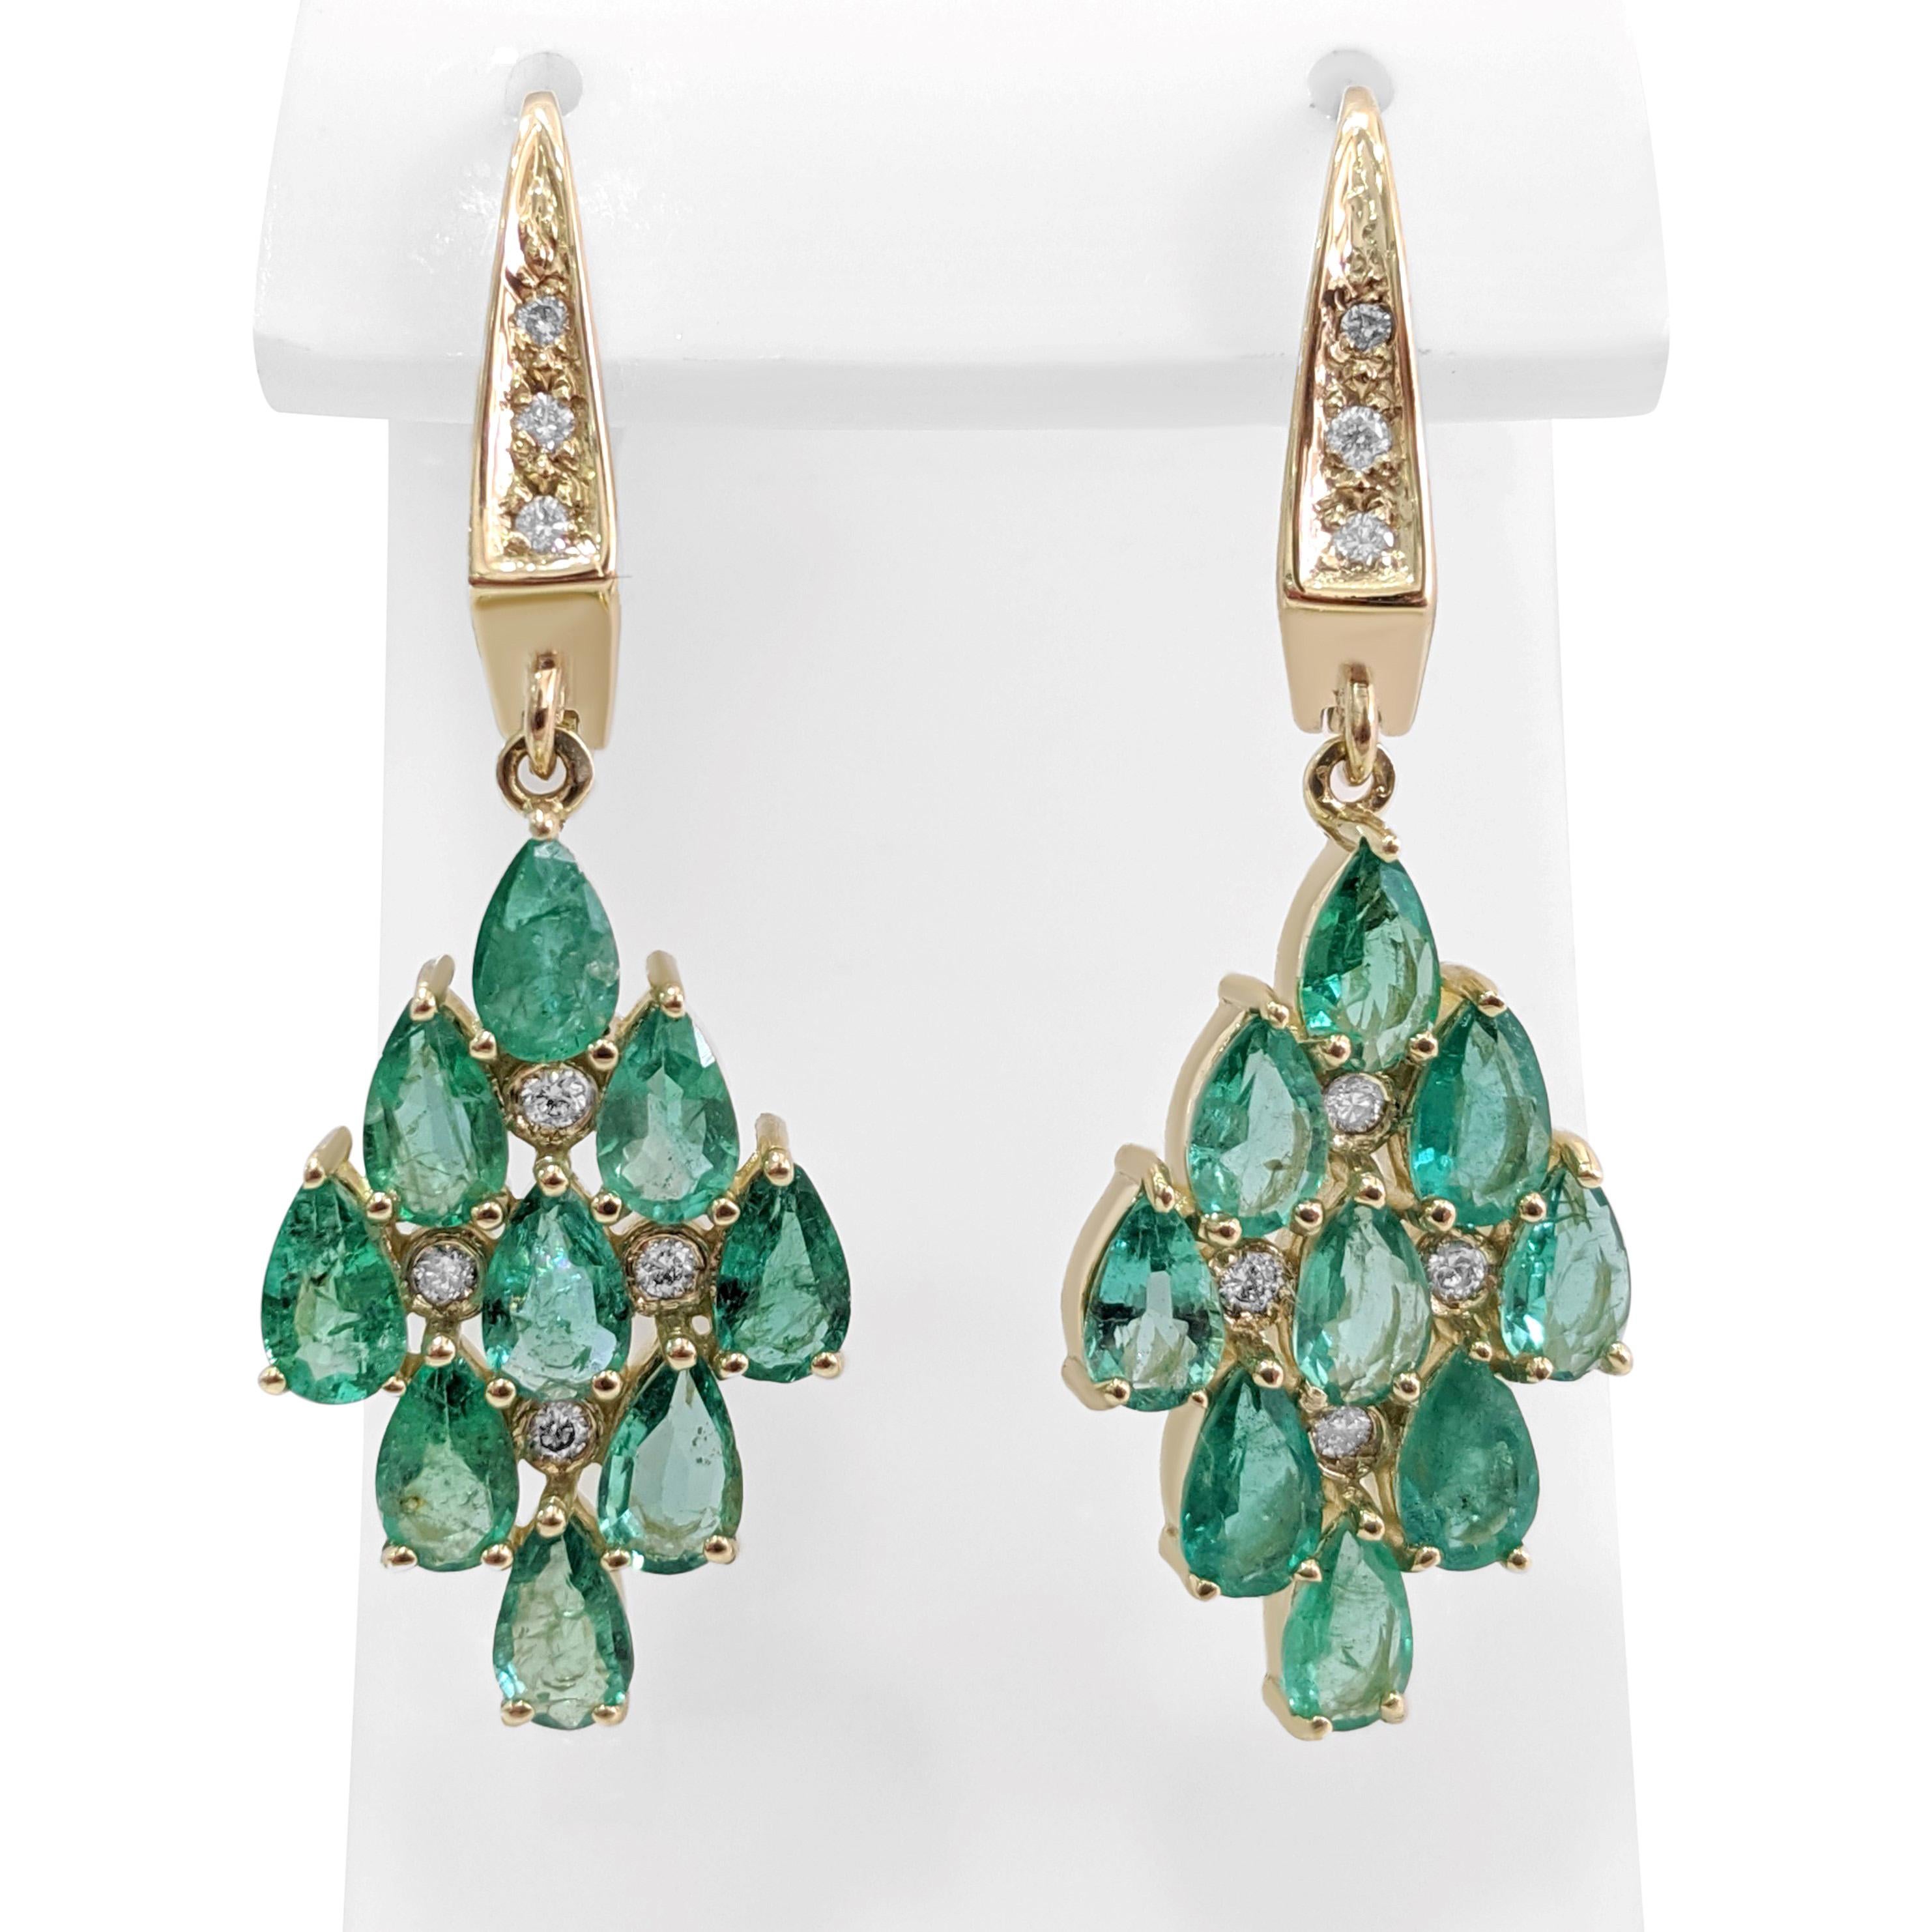 Women's $1 No Reserve! - 3.12cttw Emerald & 0.10cttw Diamonds, 14k Yellow Gold Earrings